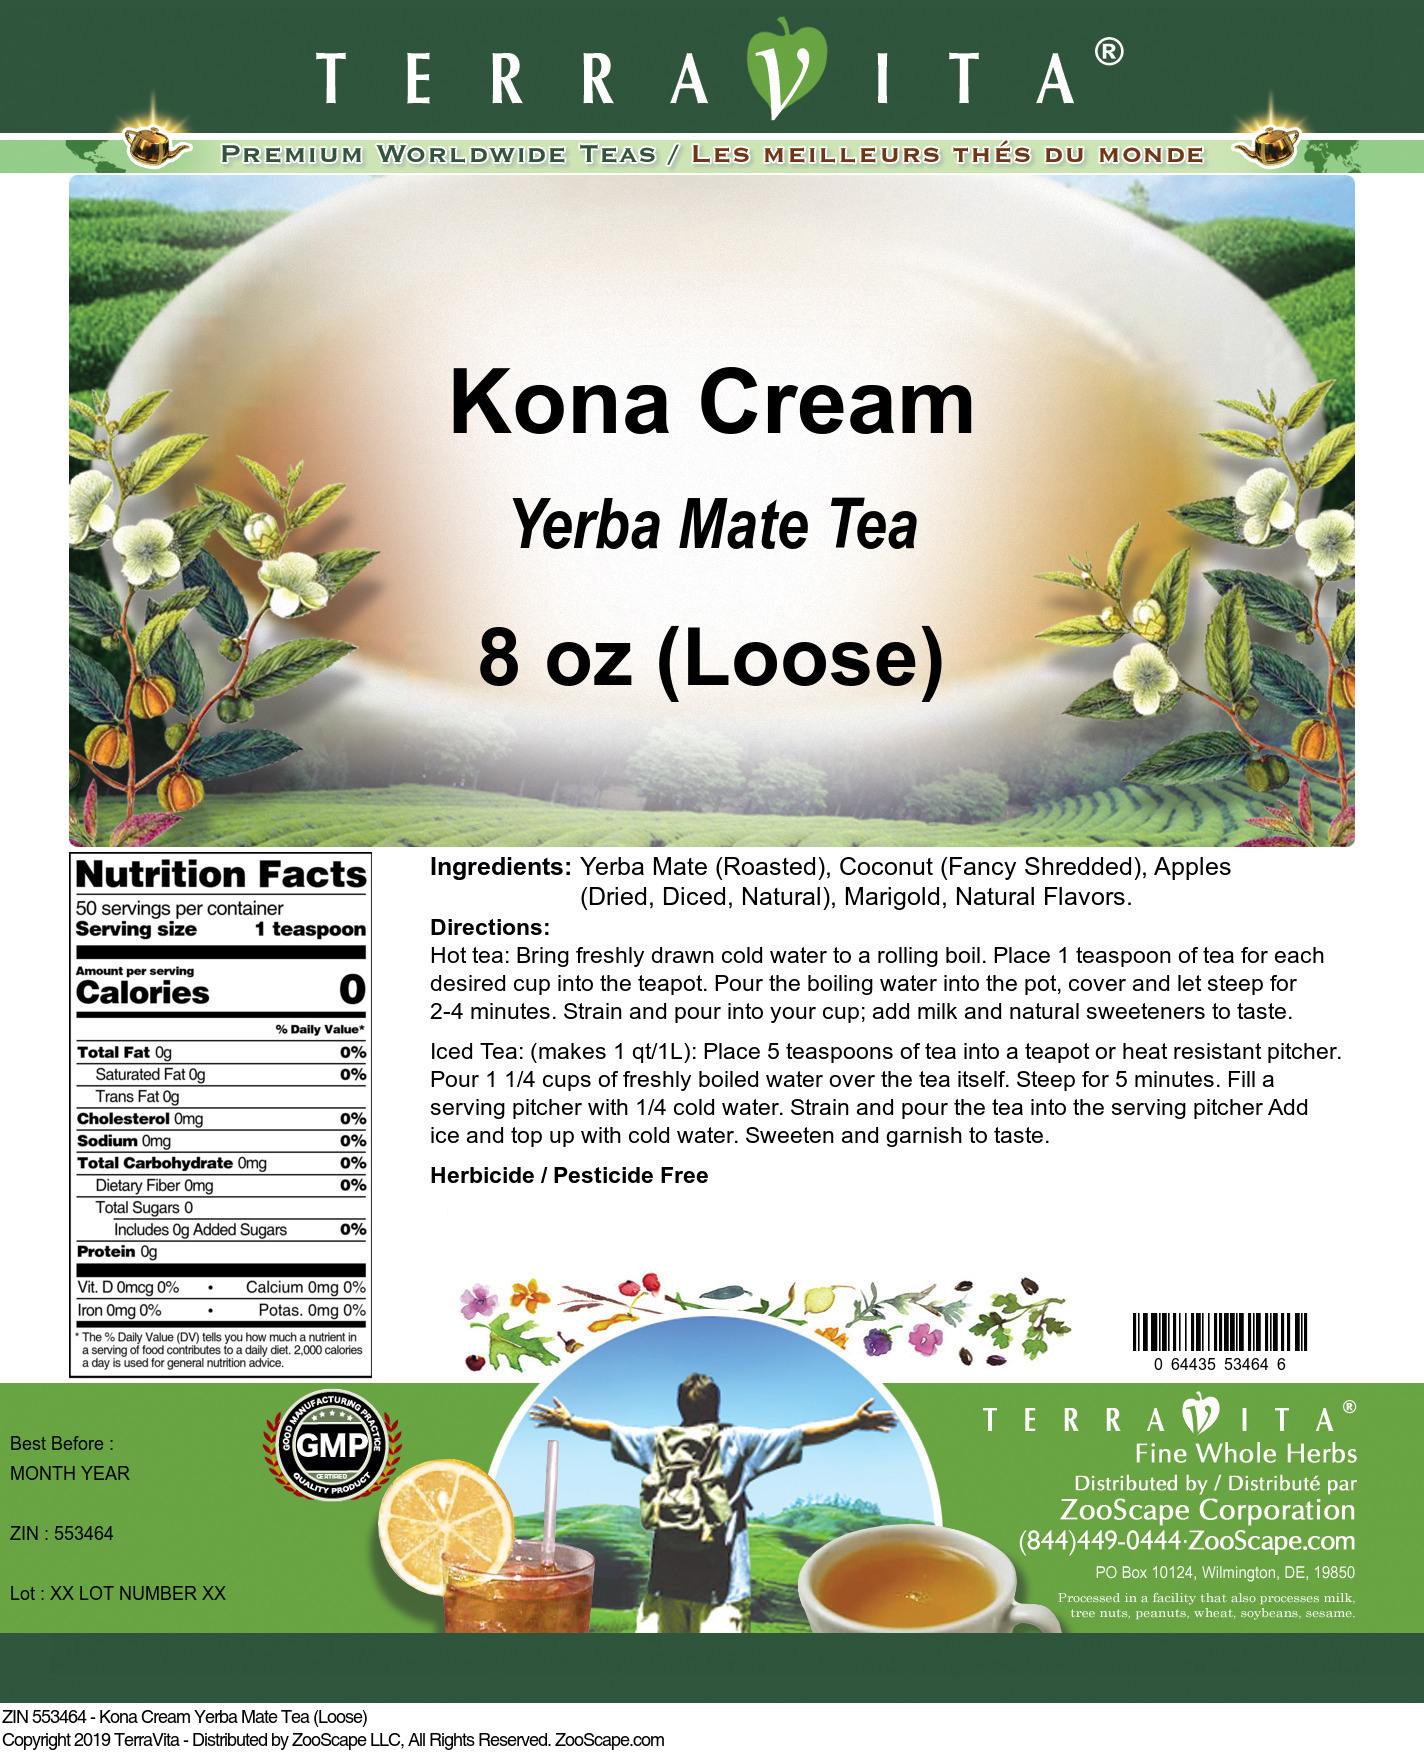 Kona Cream Yerba Mate Tea (Loose) - Label